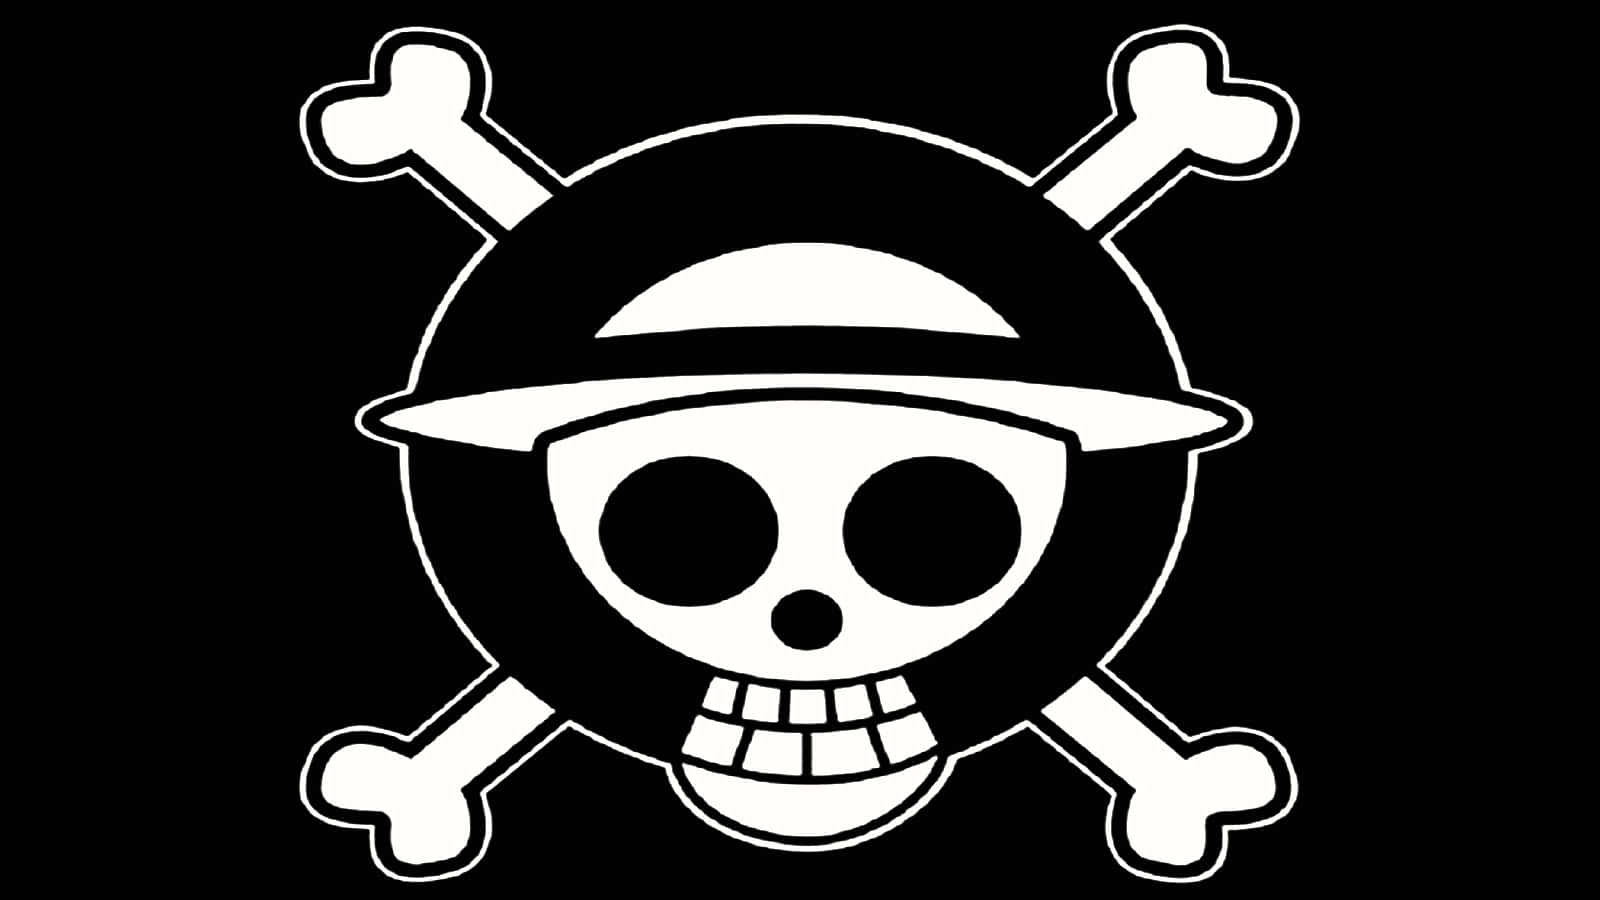 One Piece Skull And Crossbones Logo Wallpaper